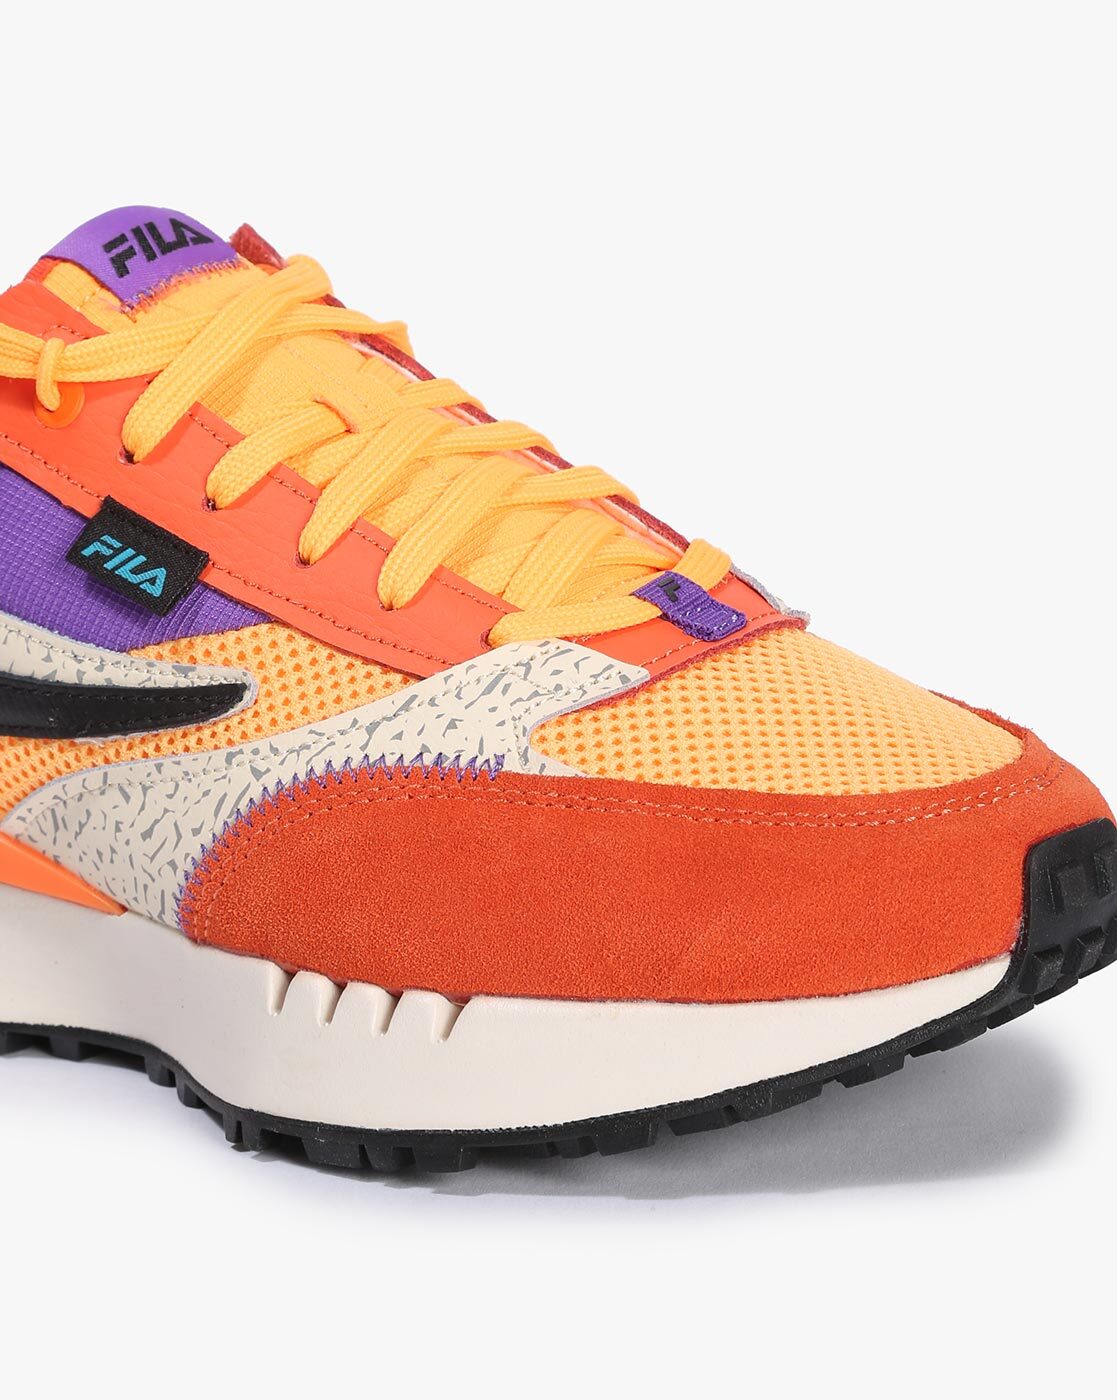 Fila Disruptor 2 Orange/Burgandy | Tenis shoes, Sneakers nike, Nike air